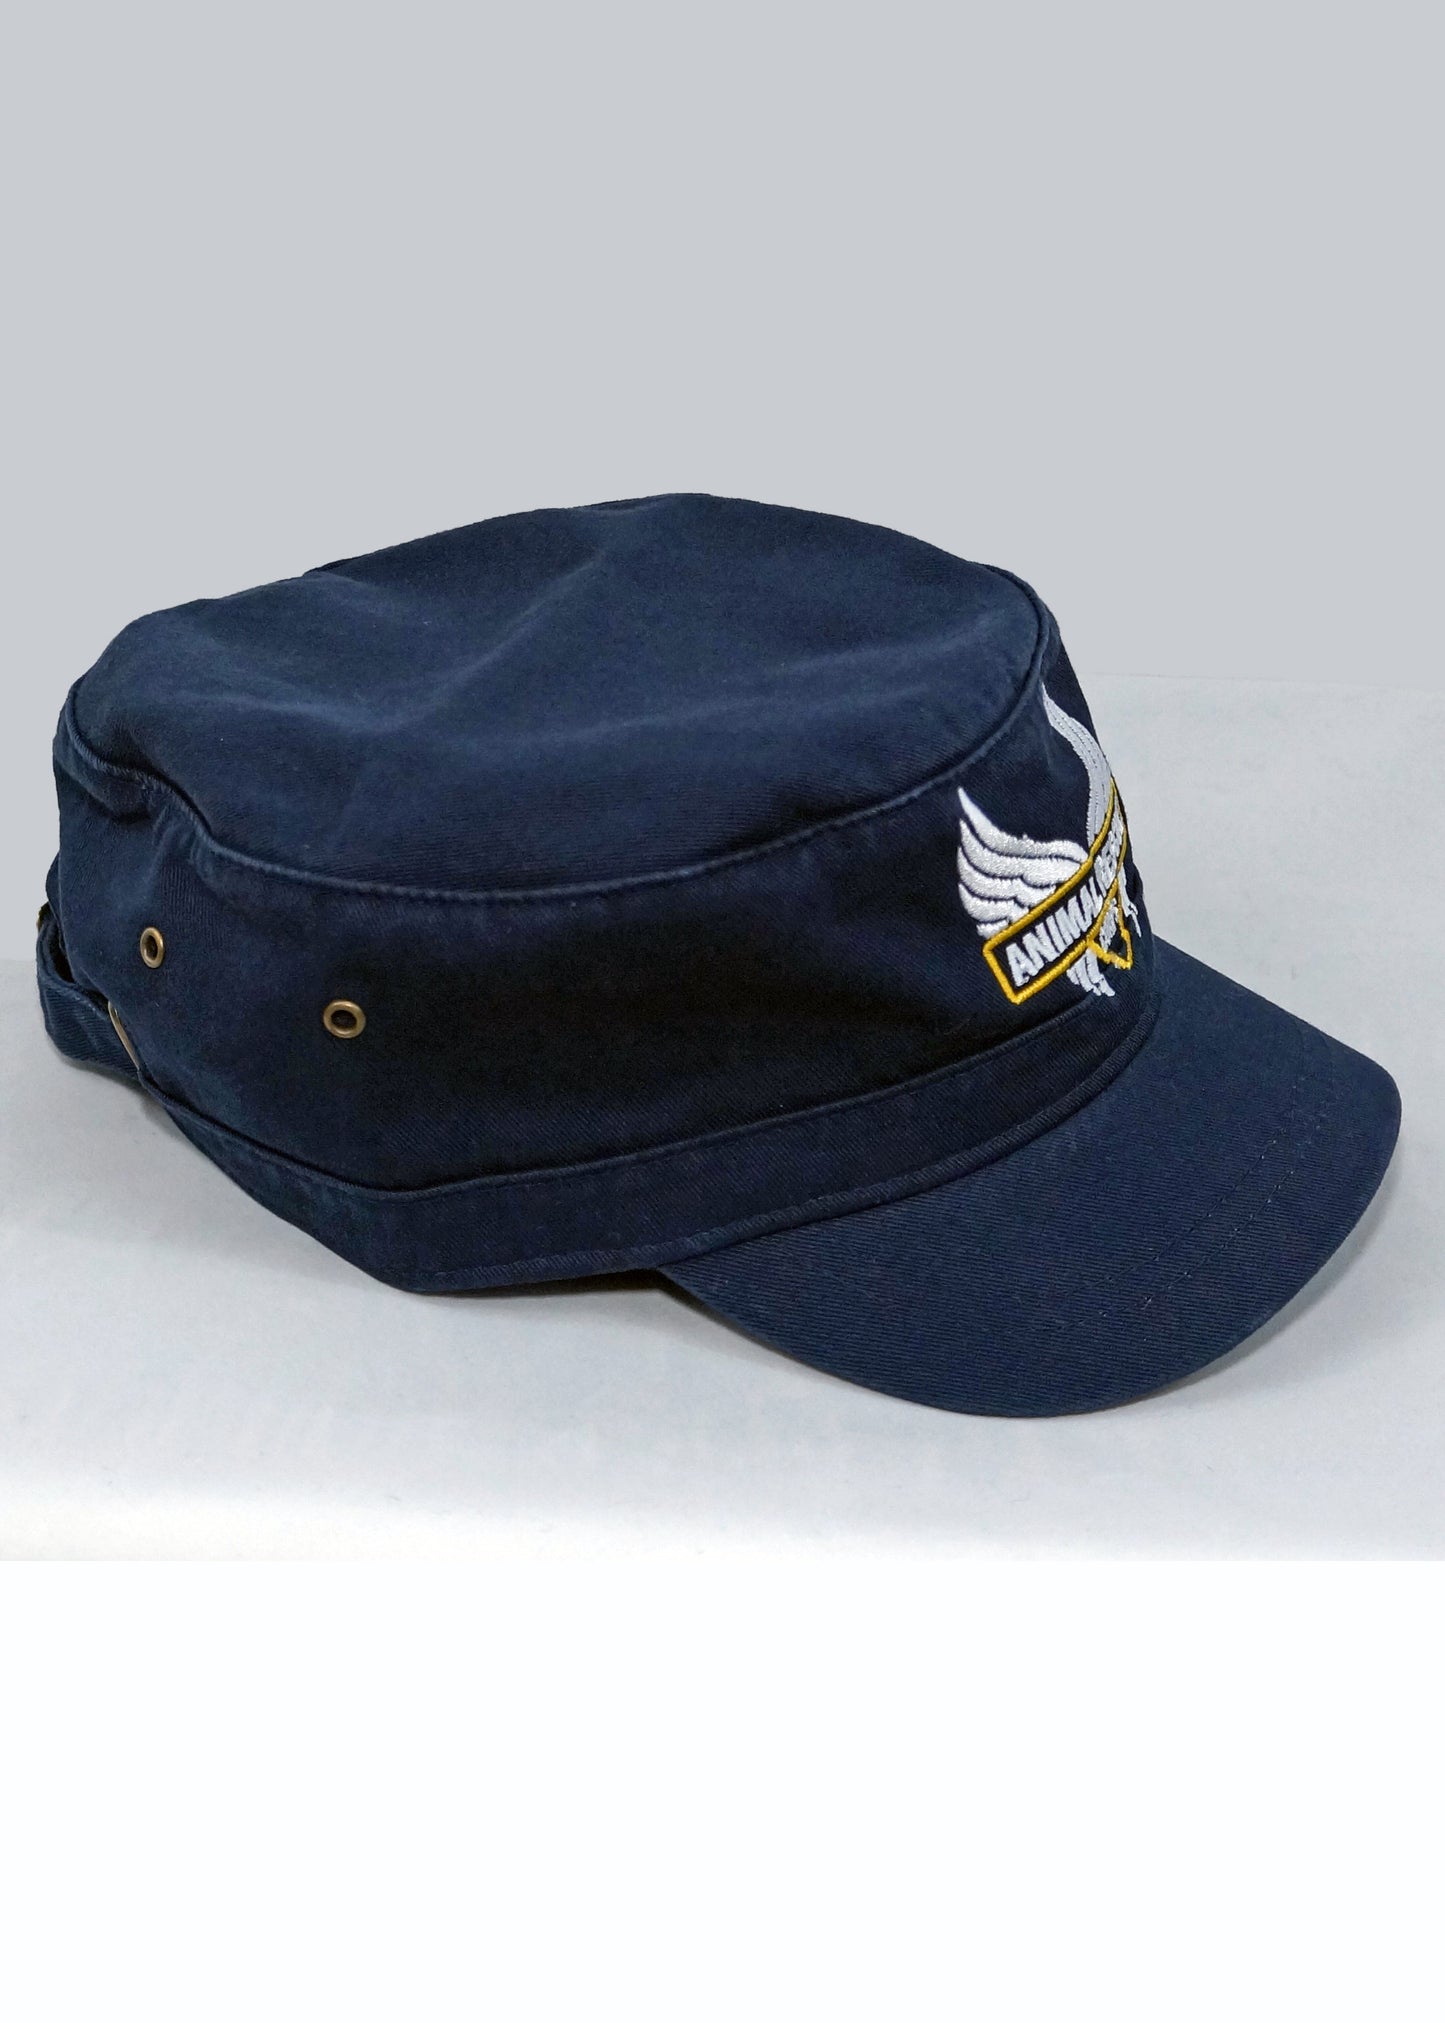 Military Style Cap